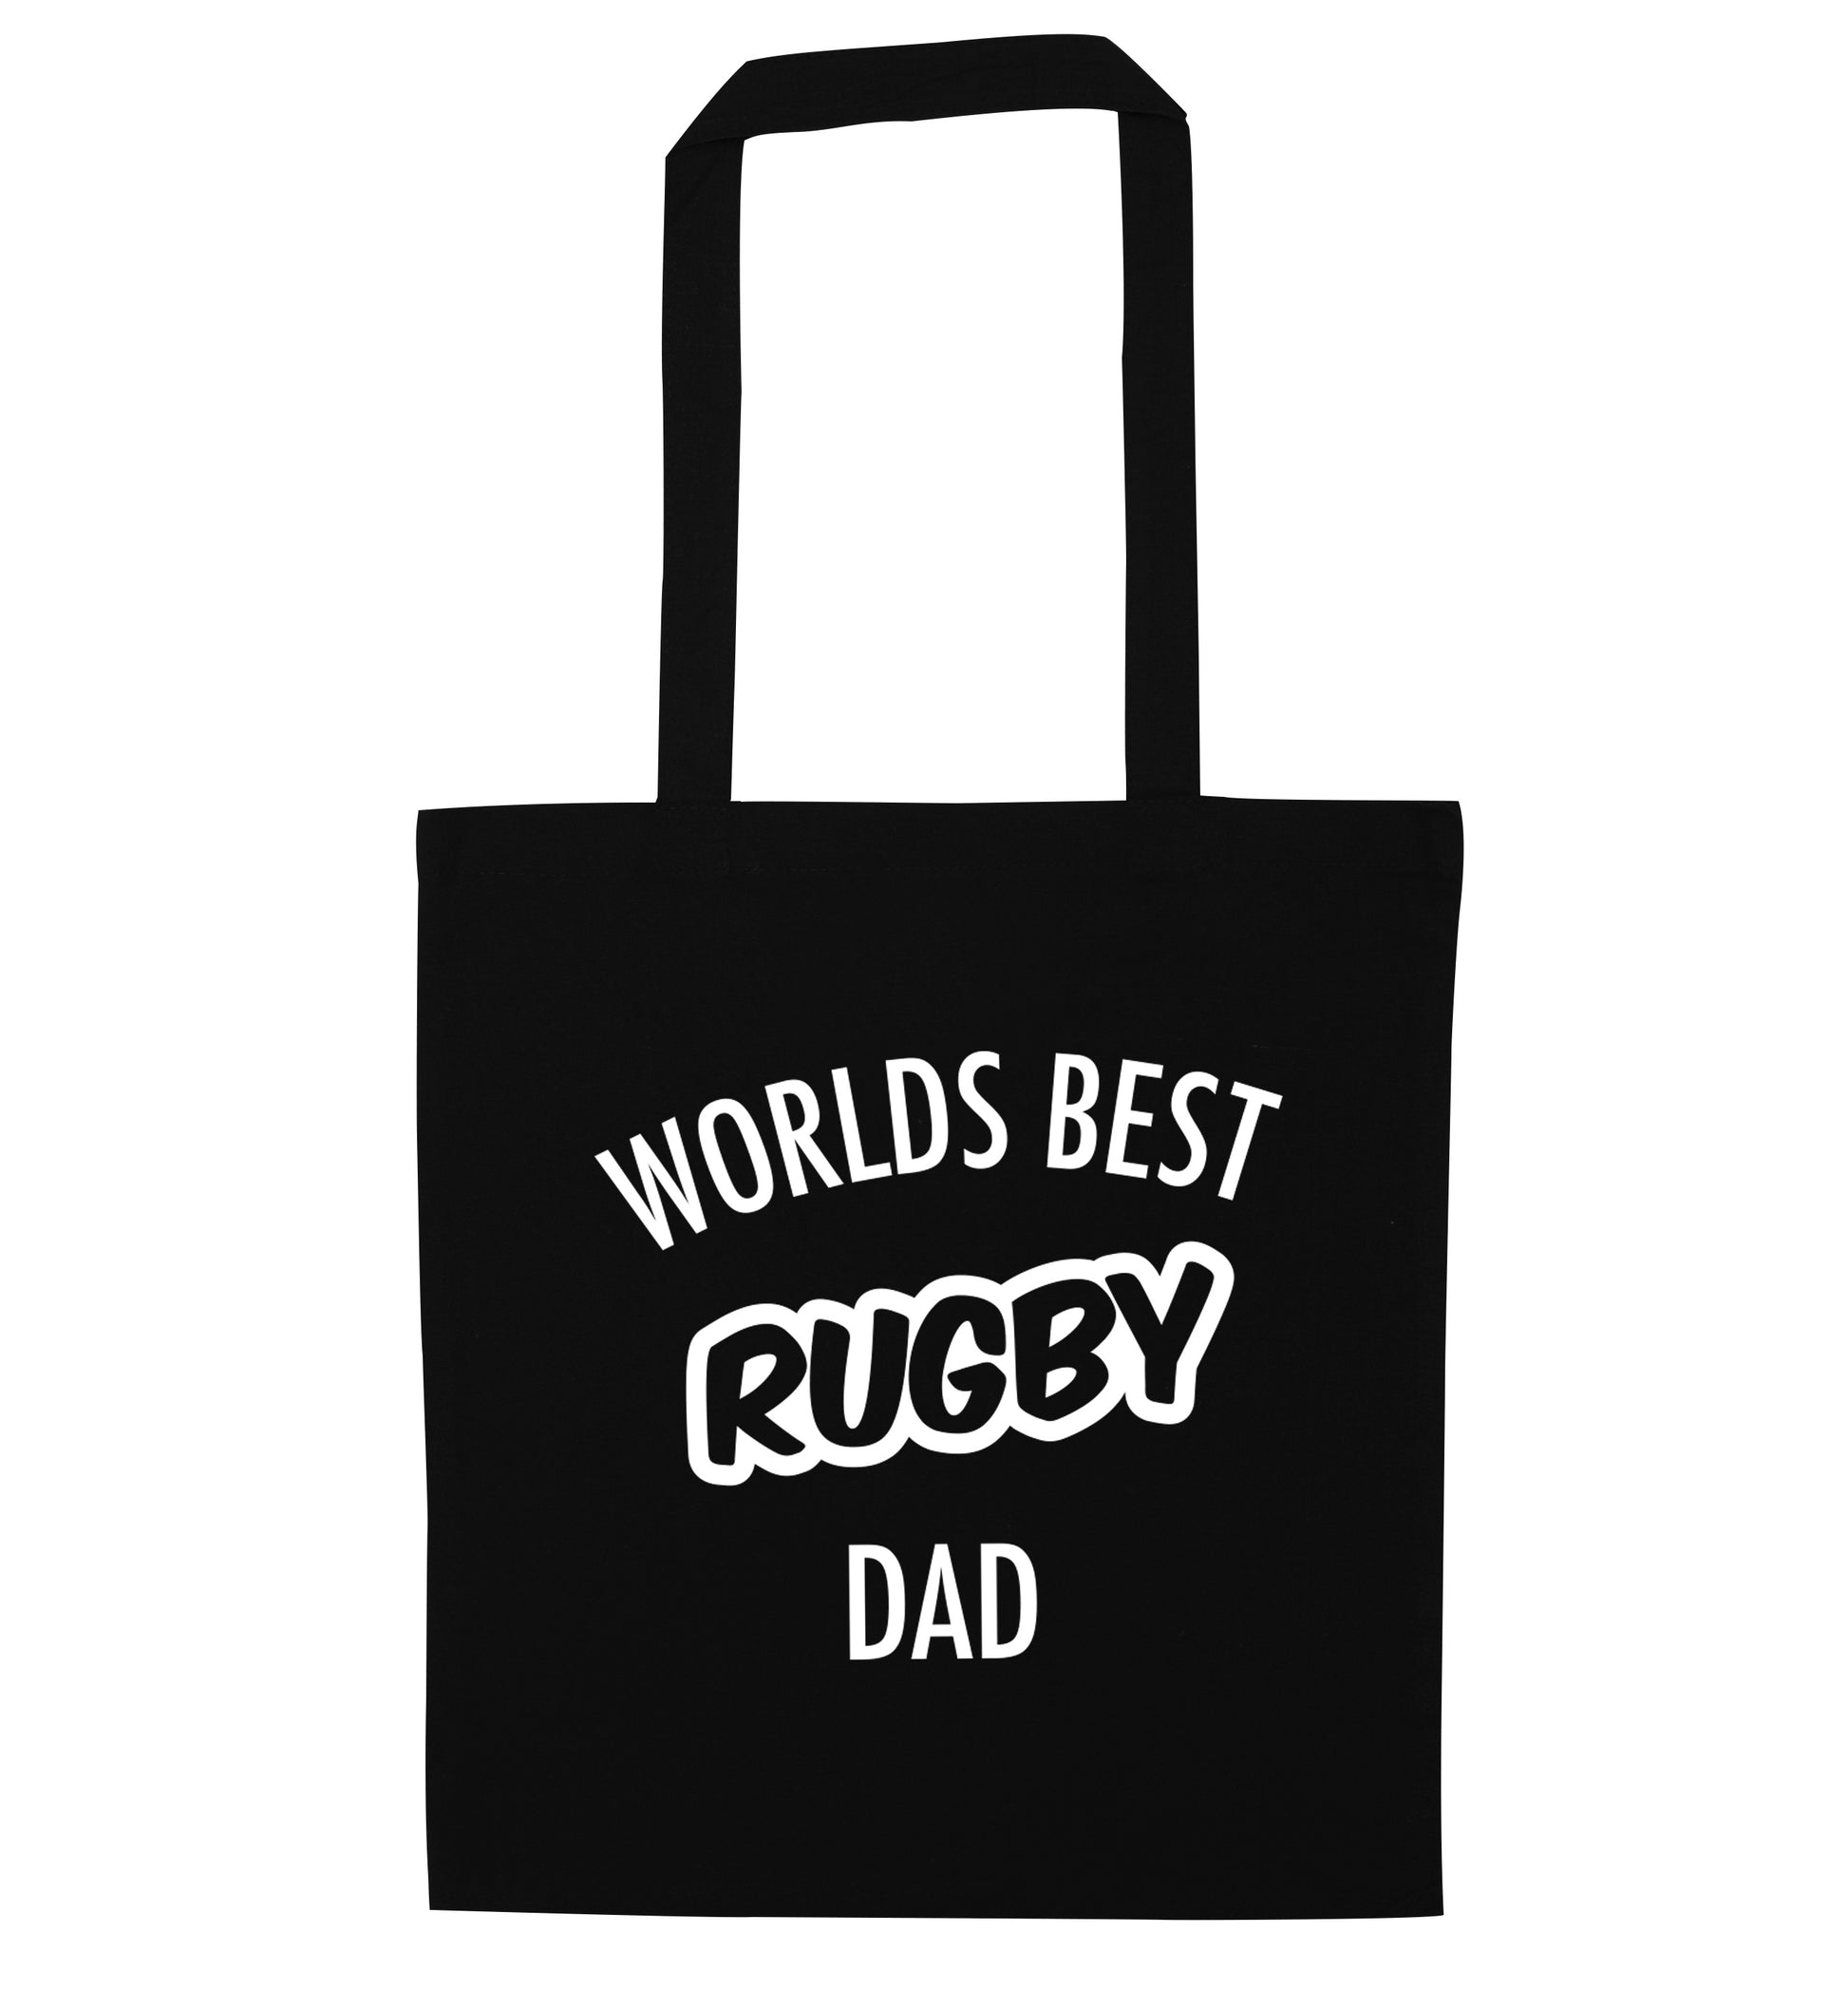 Worlds best rugby dad black tote bag